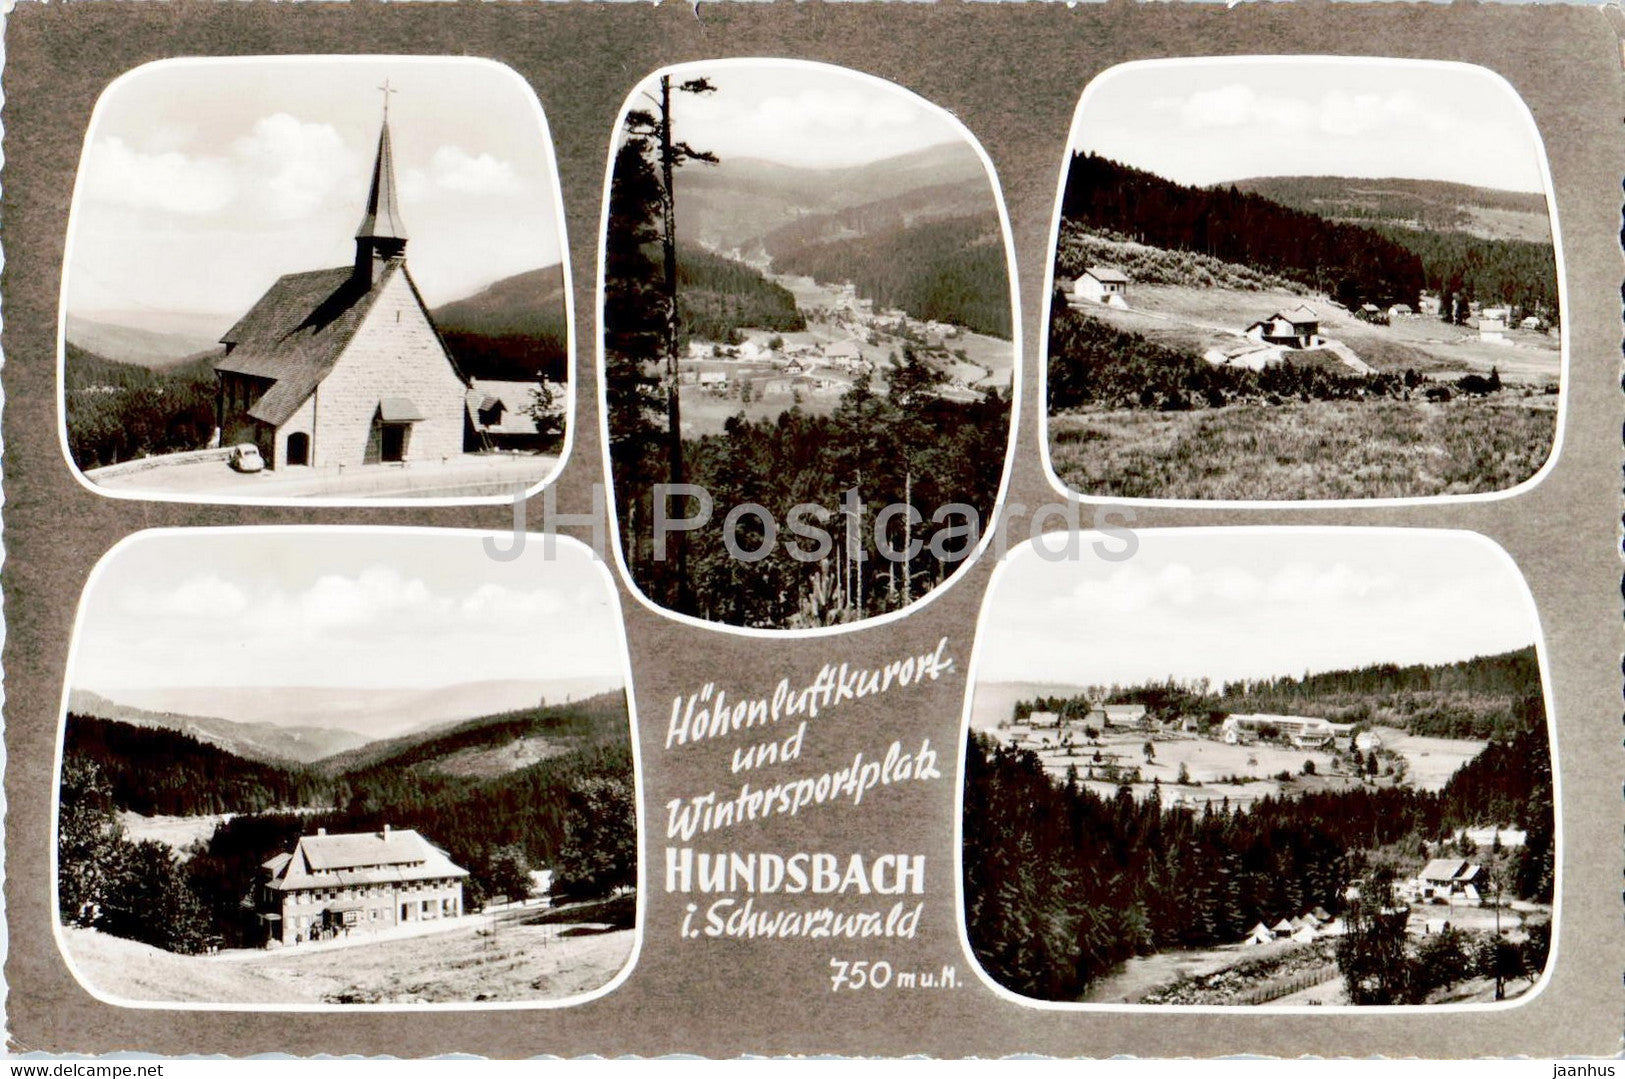 Hohenluftkurort und Wintersportplatz Hundsbach 800 m - church - old postcard - Germany - used - JH Postcards